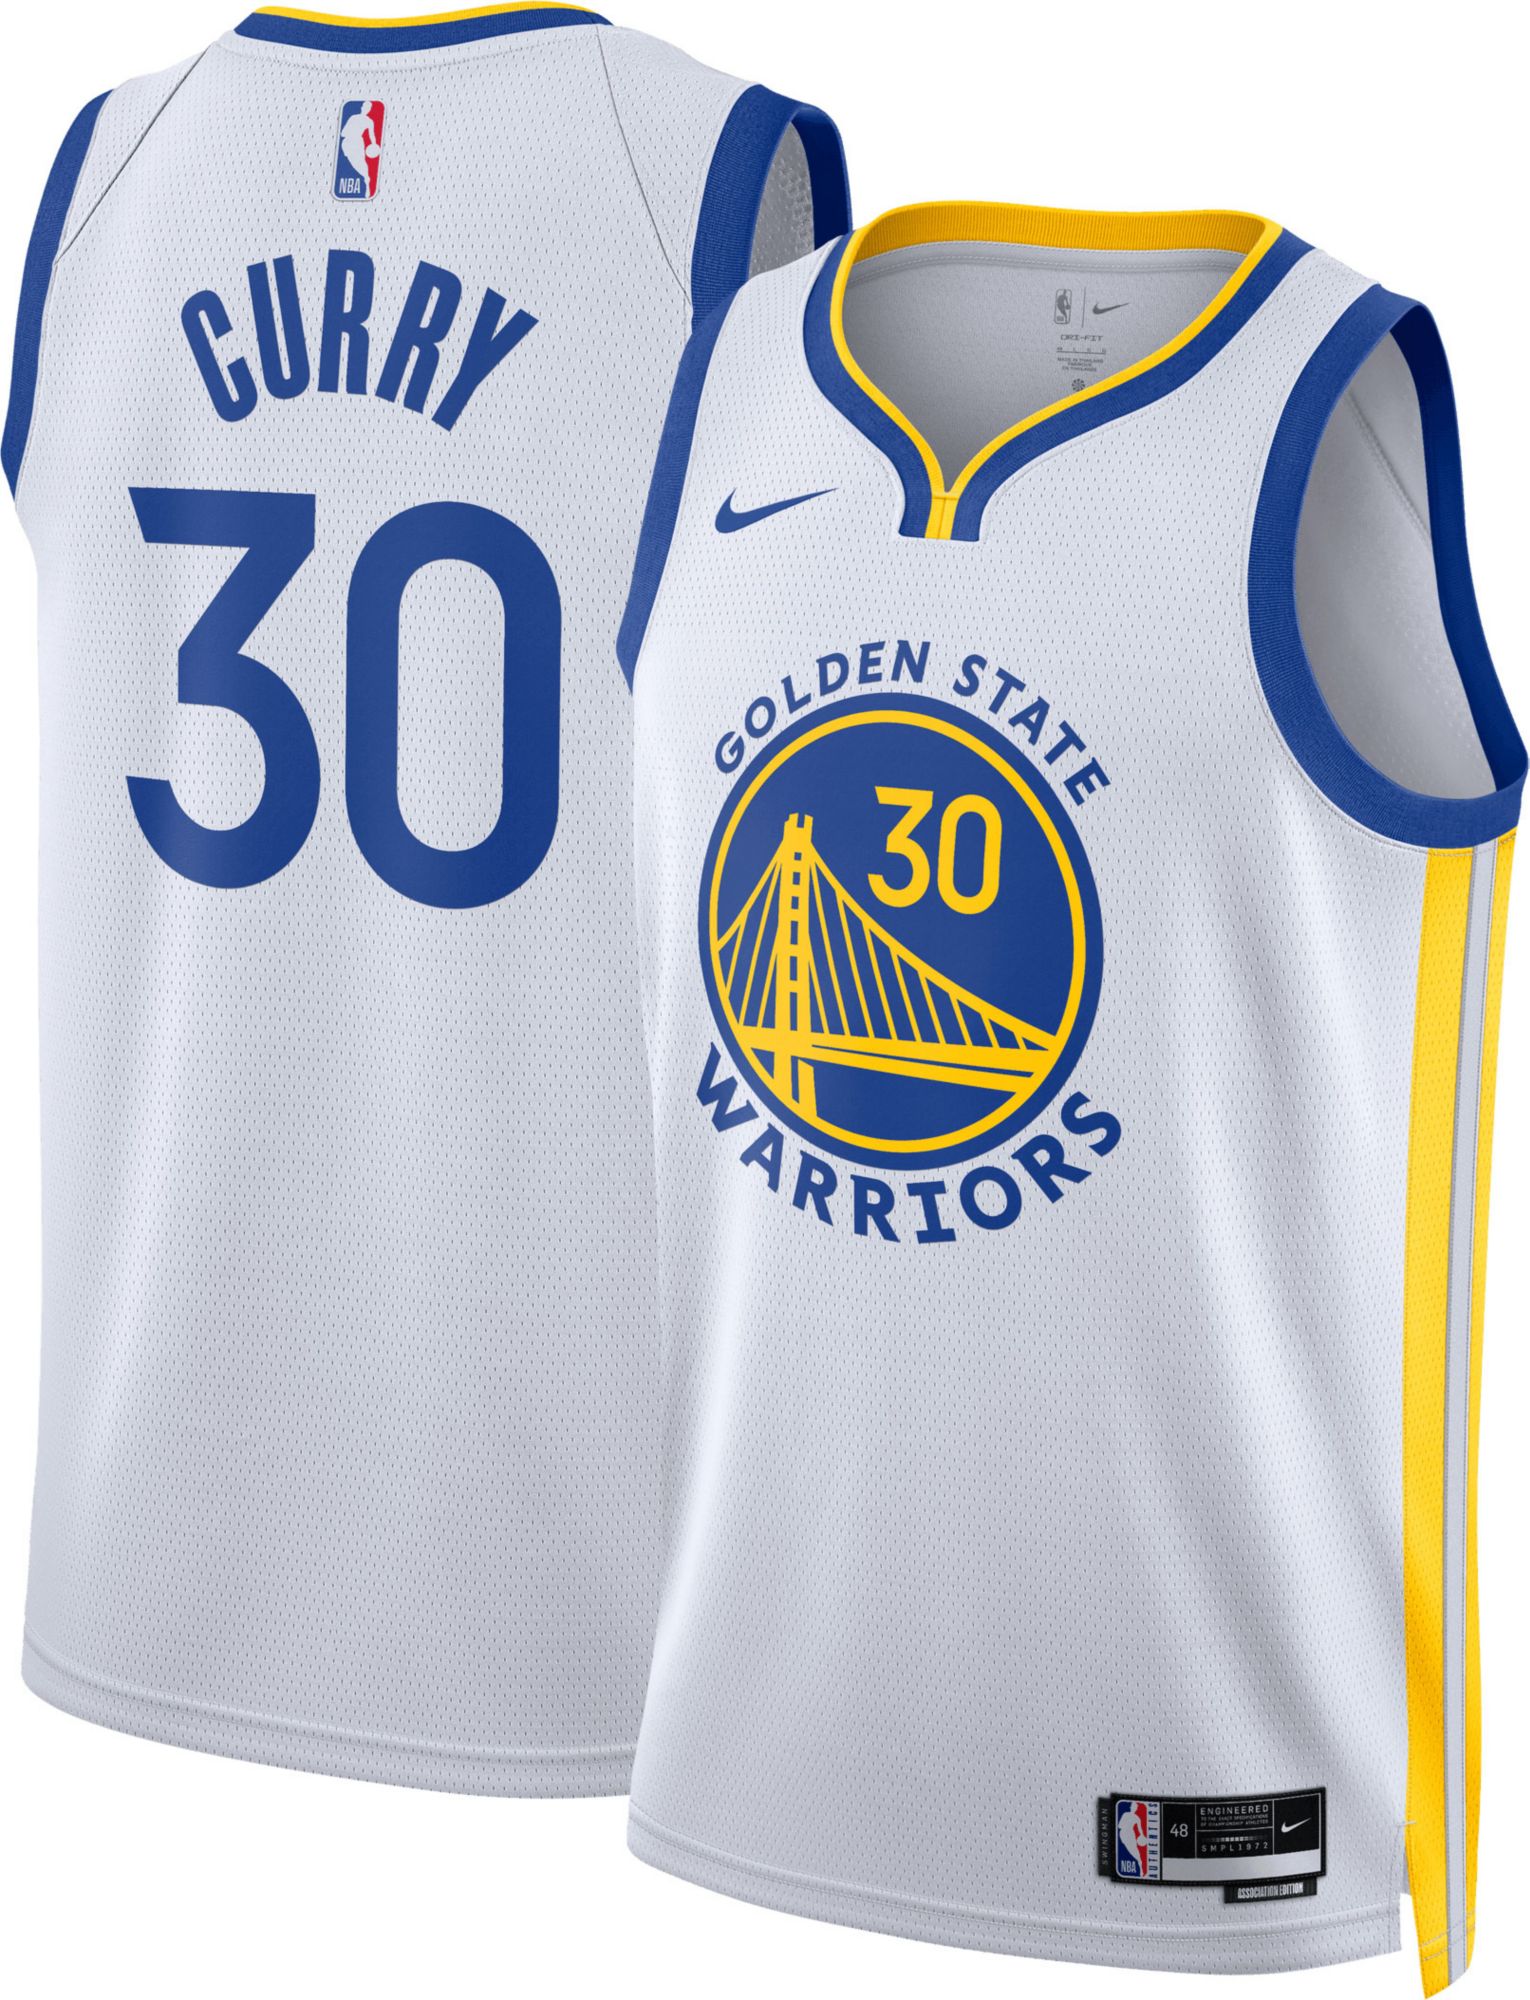 Nike NBA Warriors Curry City Edition 金洲勇士球衣DO9593-012, 男裝